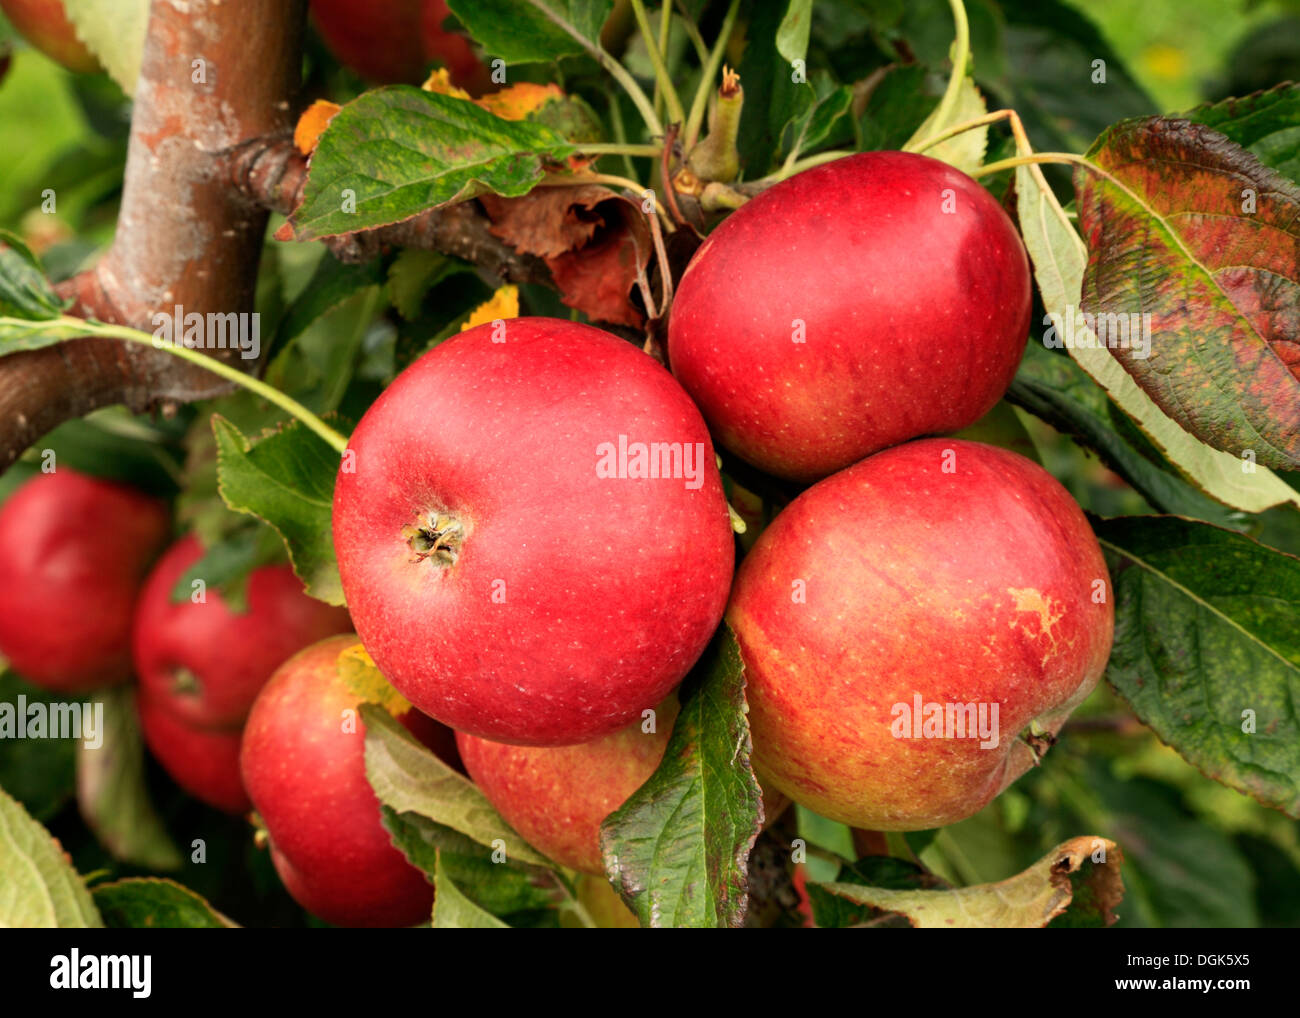 Apple 'Red Miller',  malus domestica apples variety varieties growing on tree Stock Photo